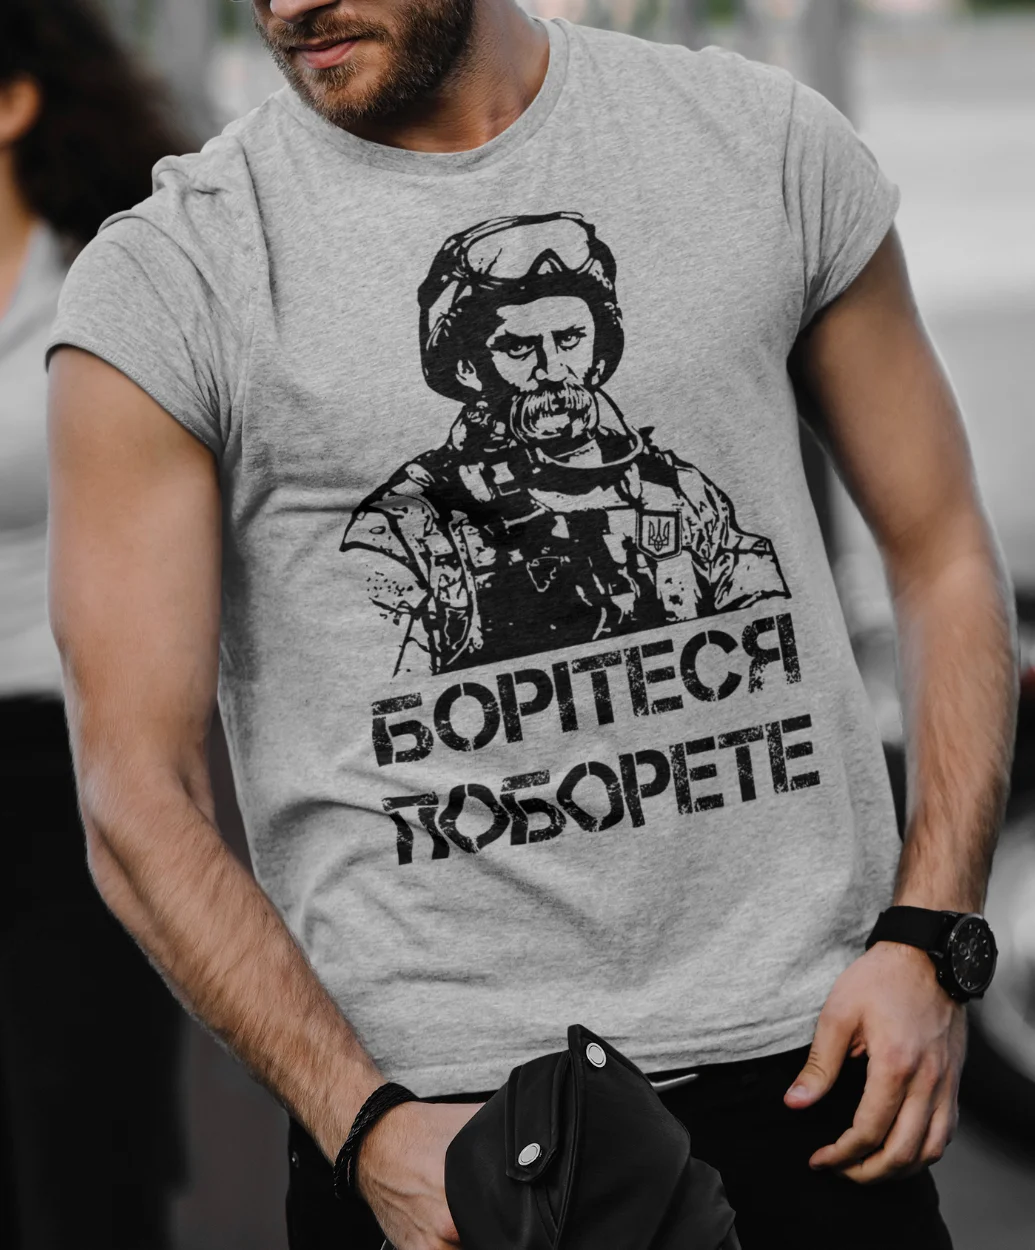 

Ukraine Keep Fighting Military Taras Shevchenko Quote Men T-Shirt Short Sleeve Casual Cotton O-Neck Summer Shirt